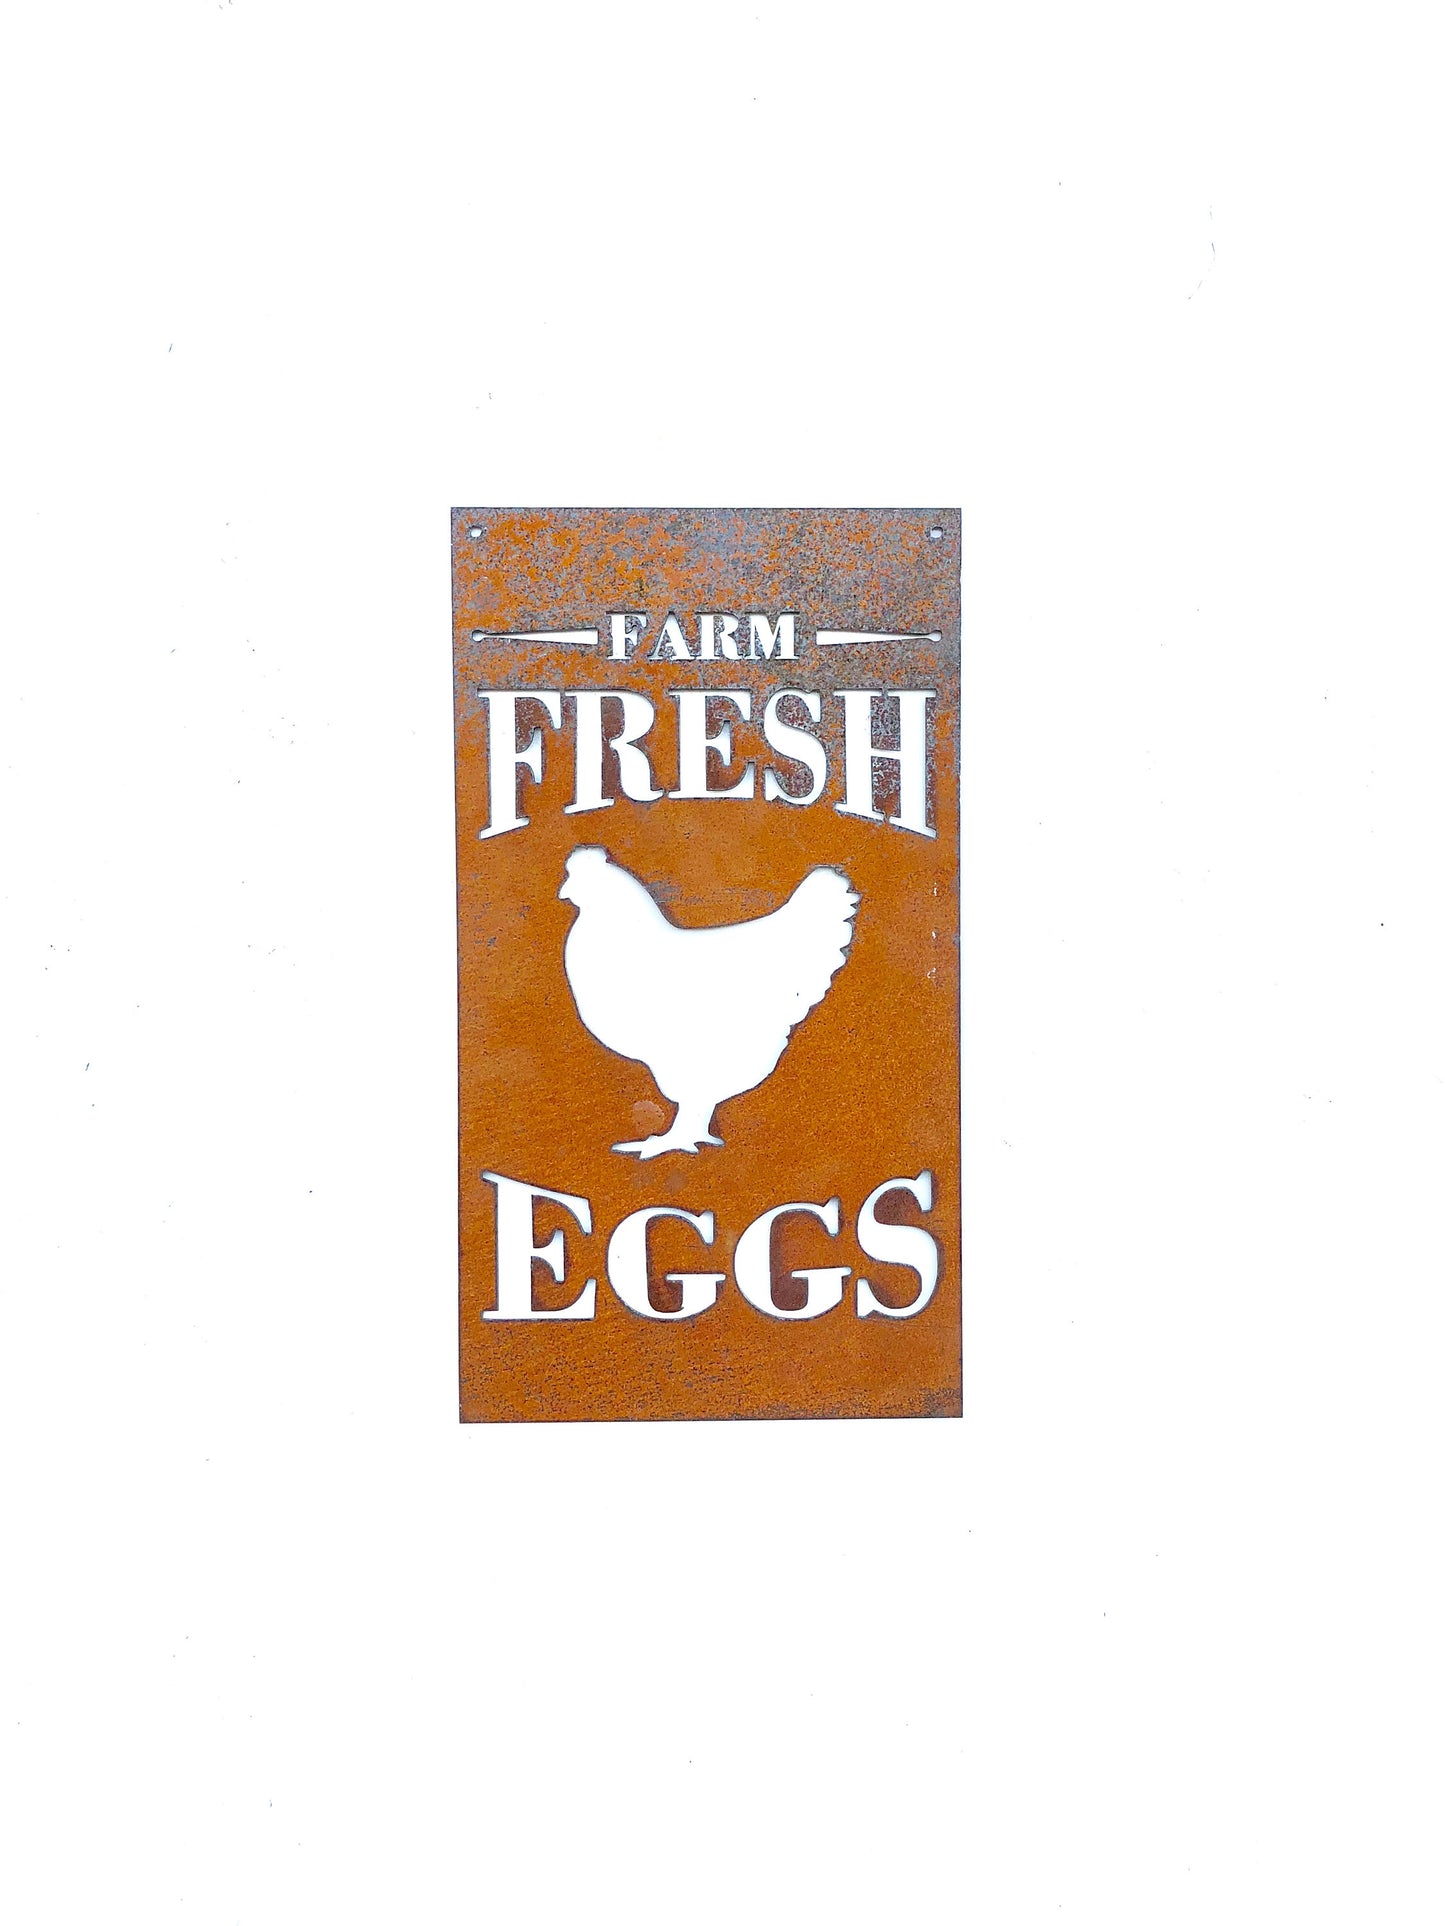 Farm Fresh Eggs Metal Sign